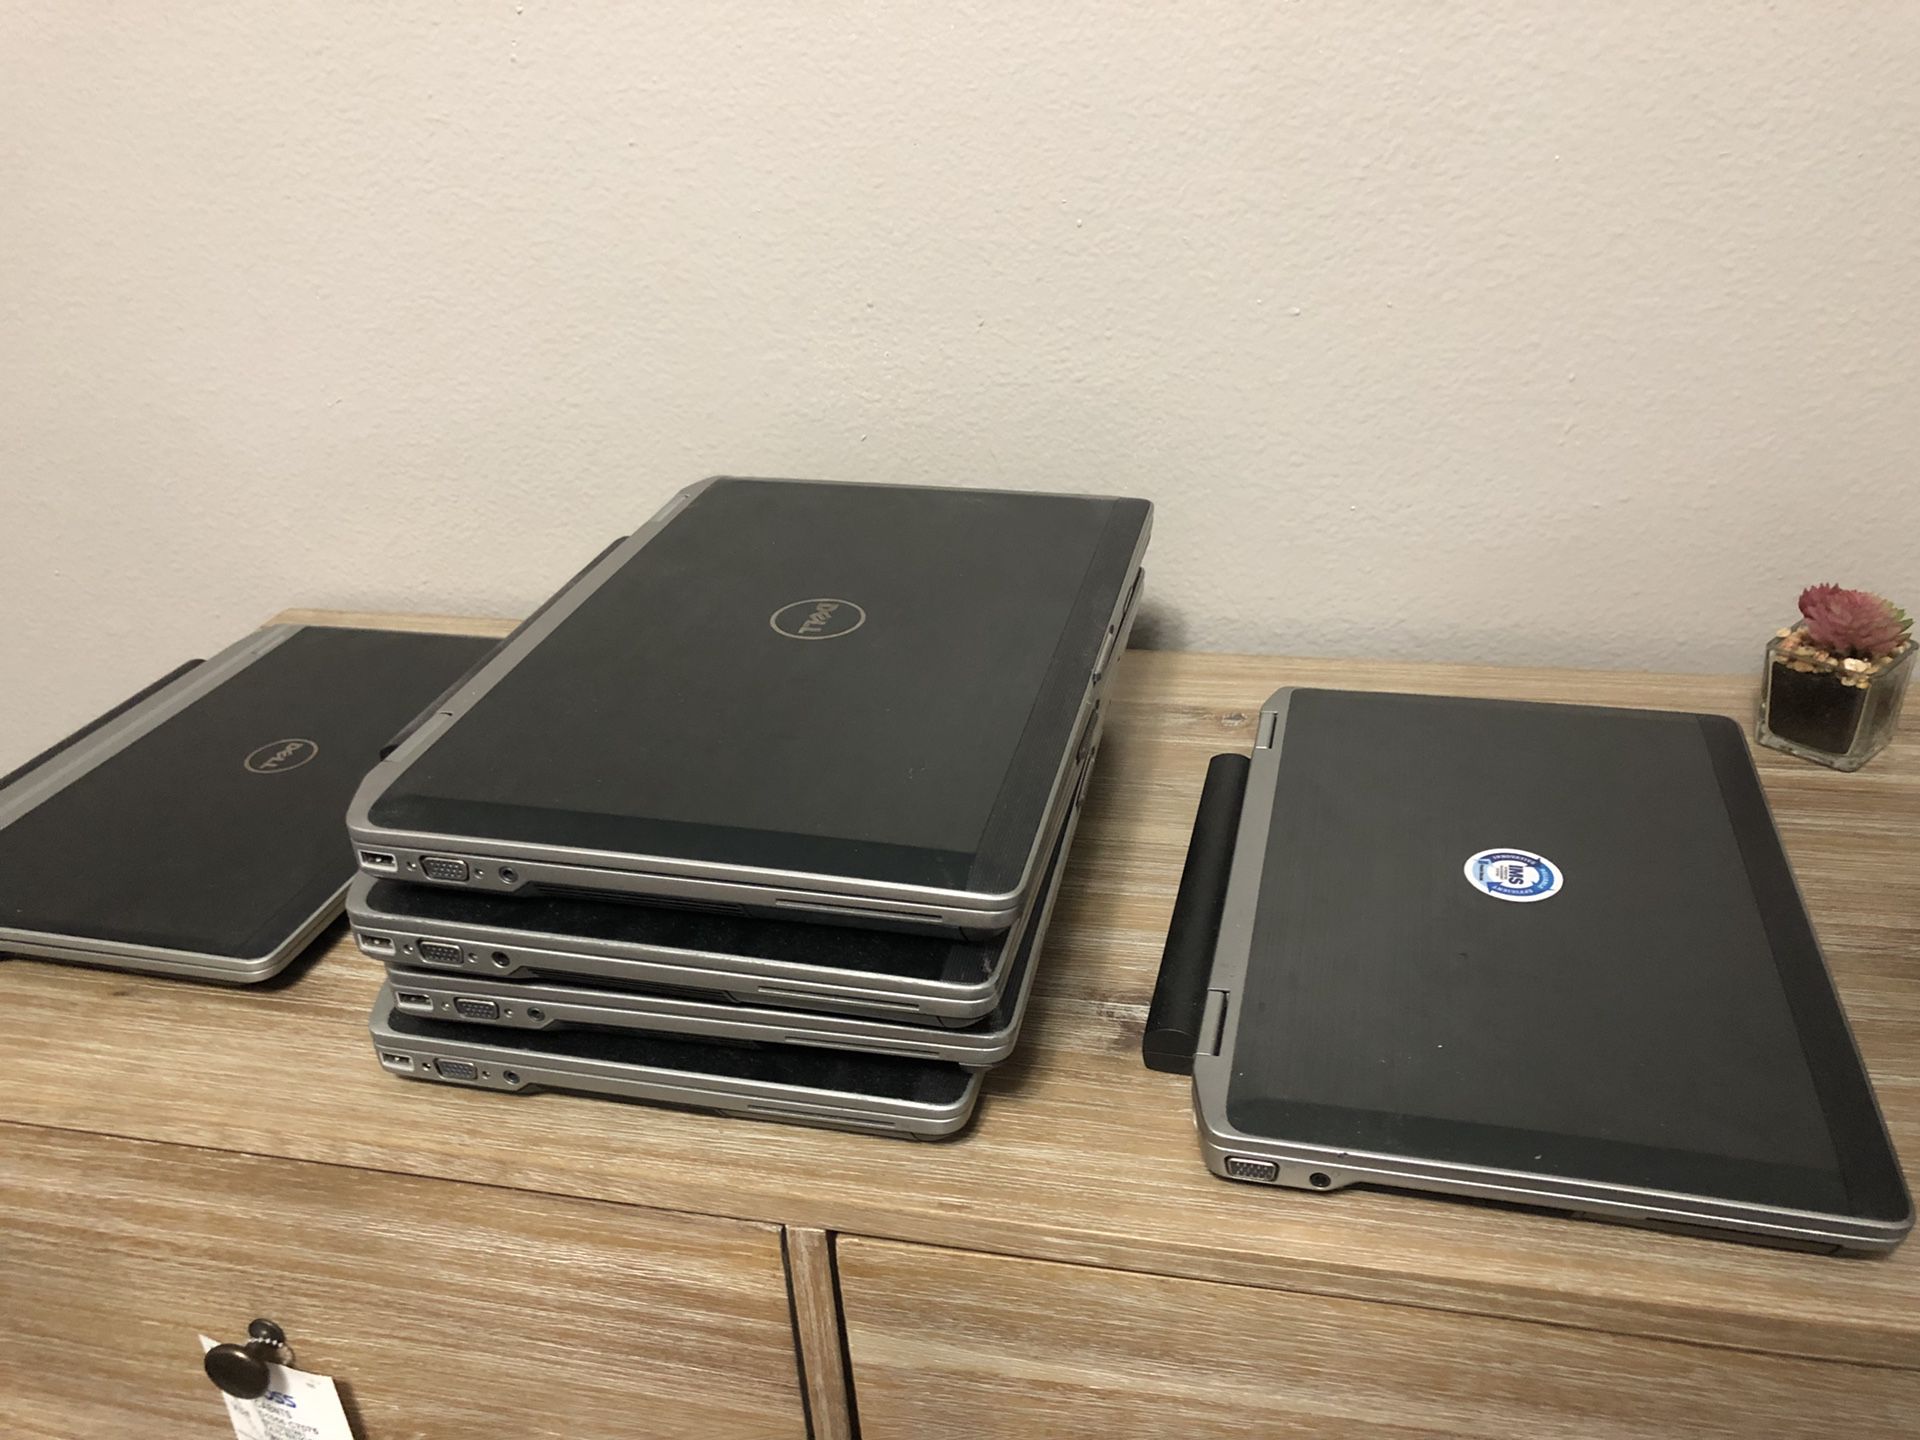 E6420 laptops. Build it how you want!